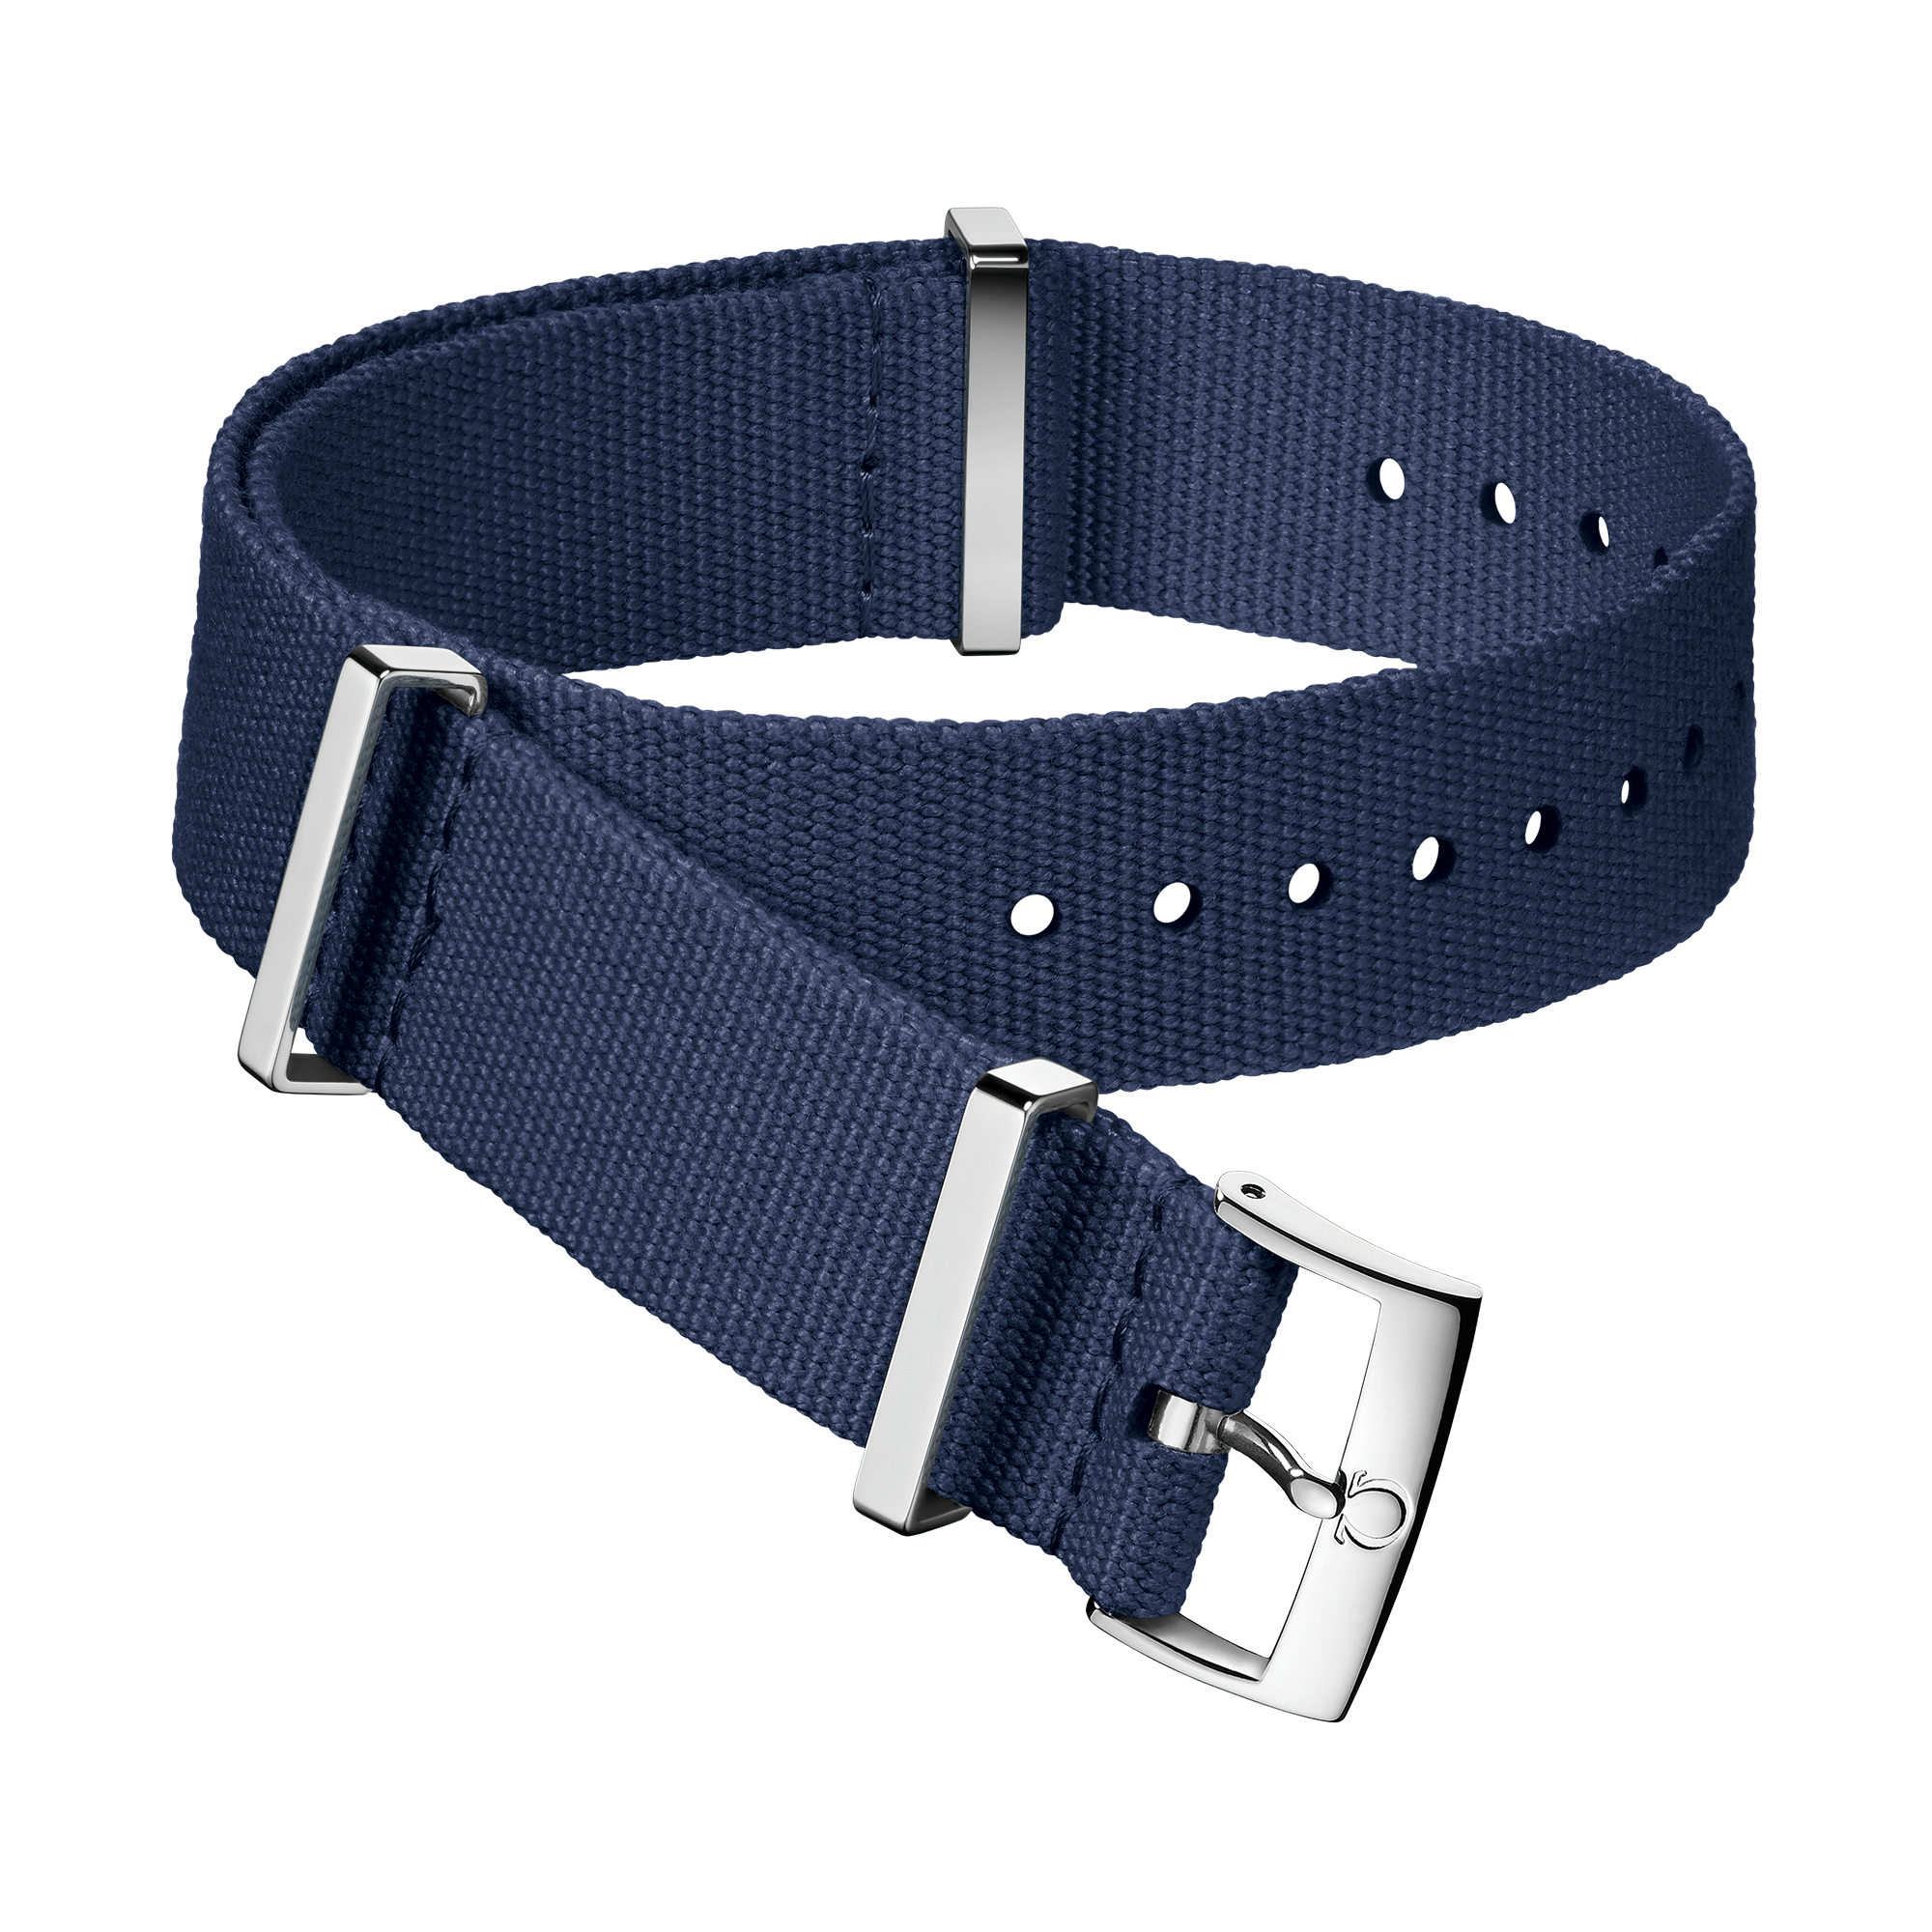 Bracelete NATO - Bracelete azul em poliéster - 031CWZ011614